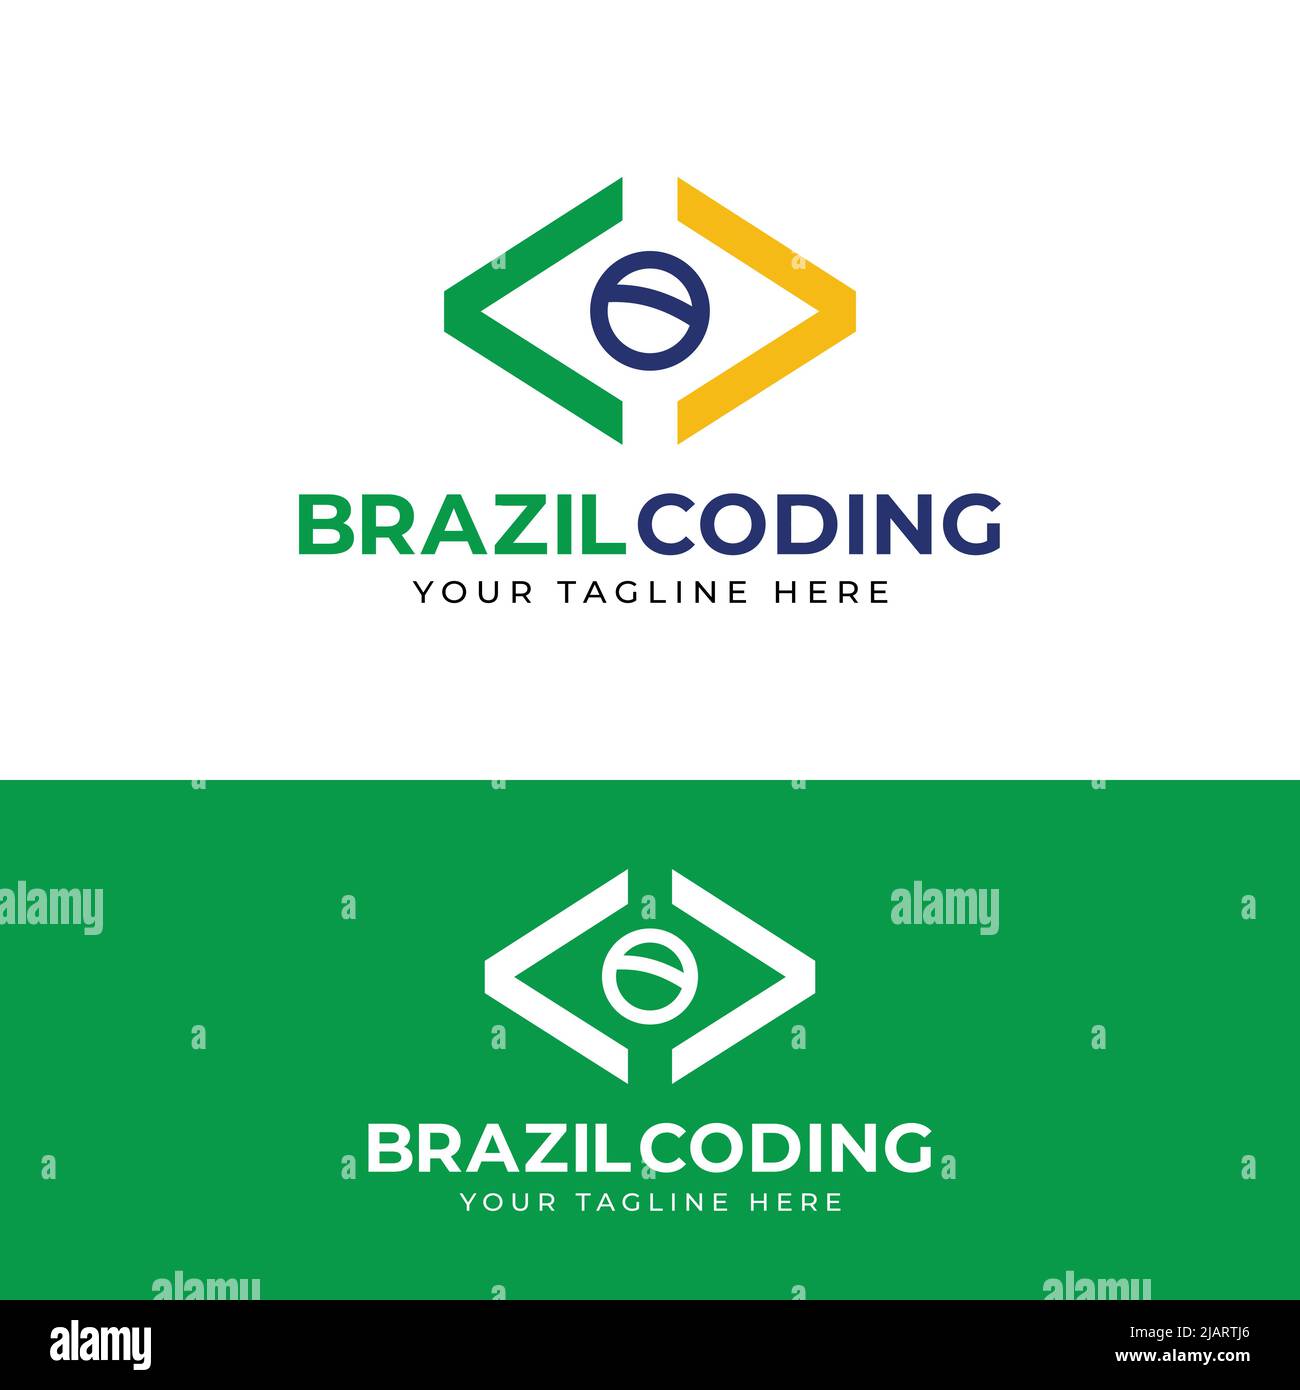 Brazil Coding Logo Design Template. Suitable for Technology Programmer Website Developer Coding Company Business Brand Corporate Logo Design Stock Vector